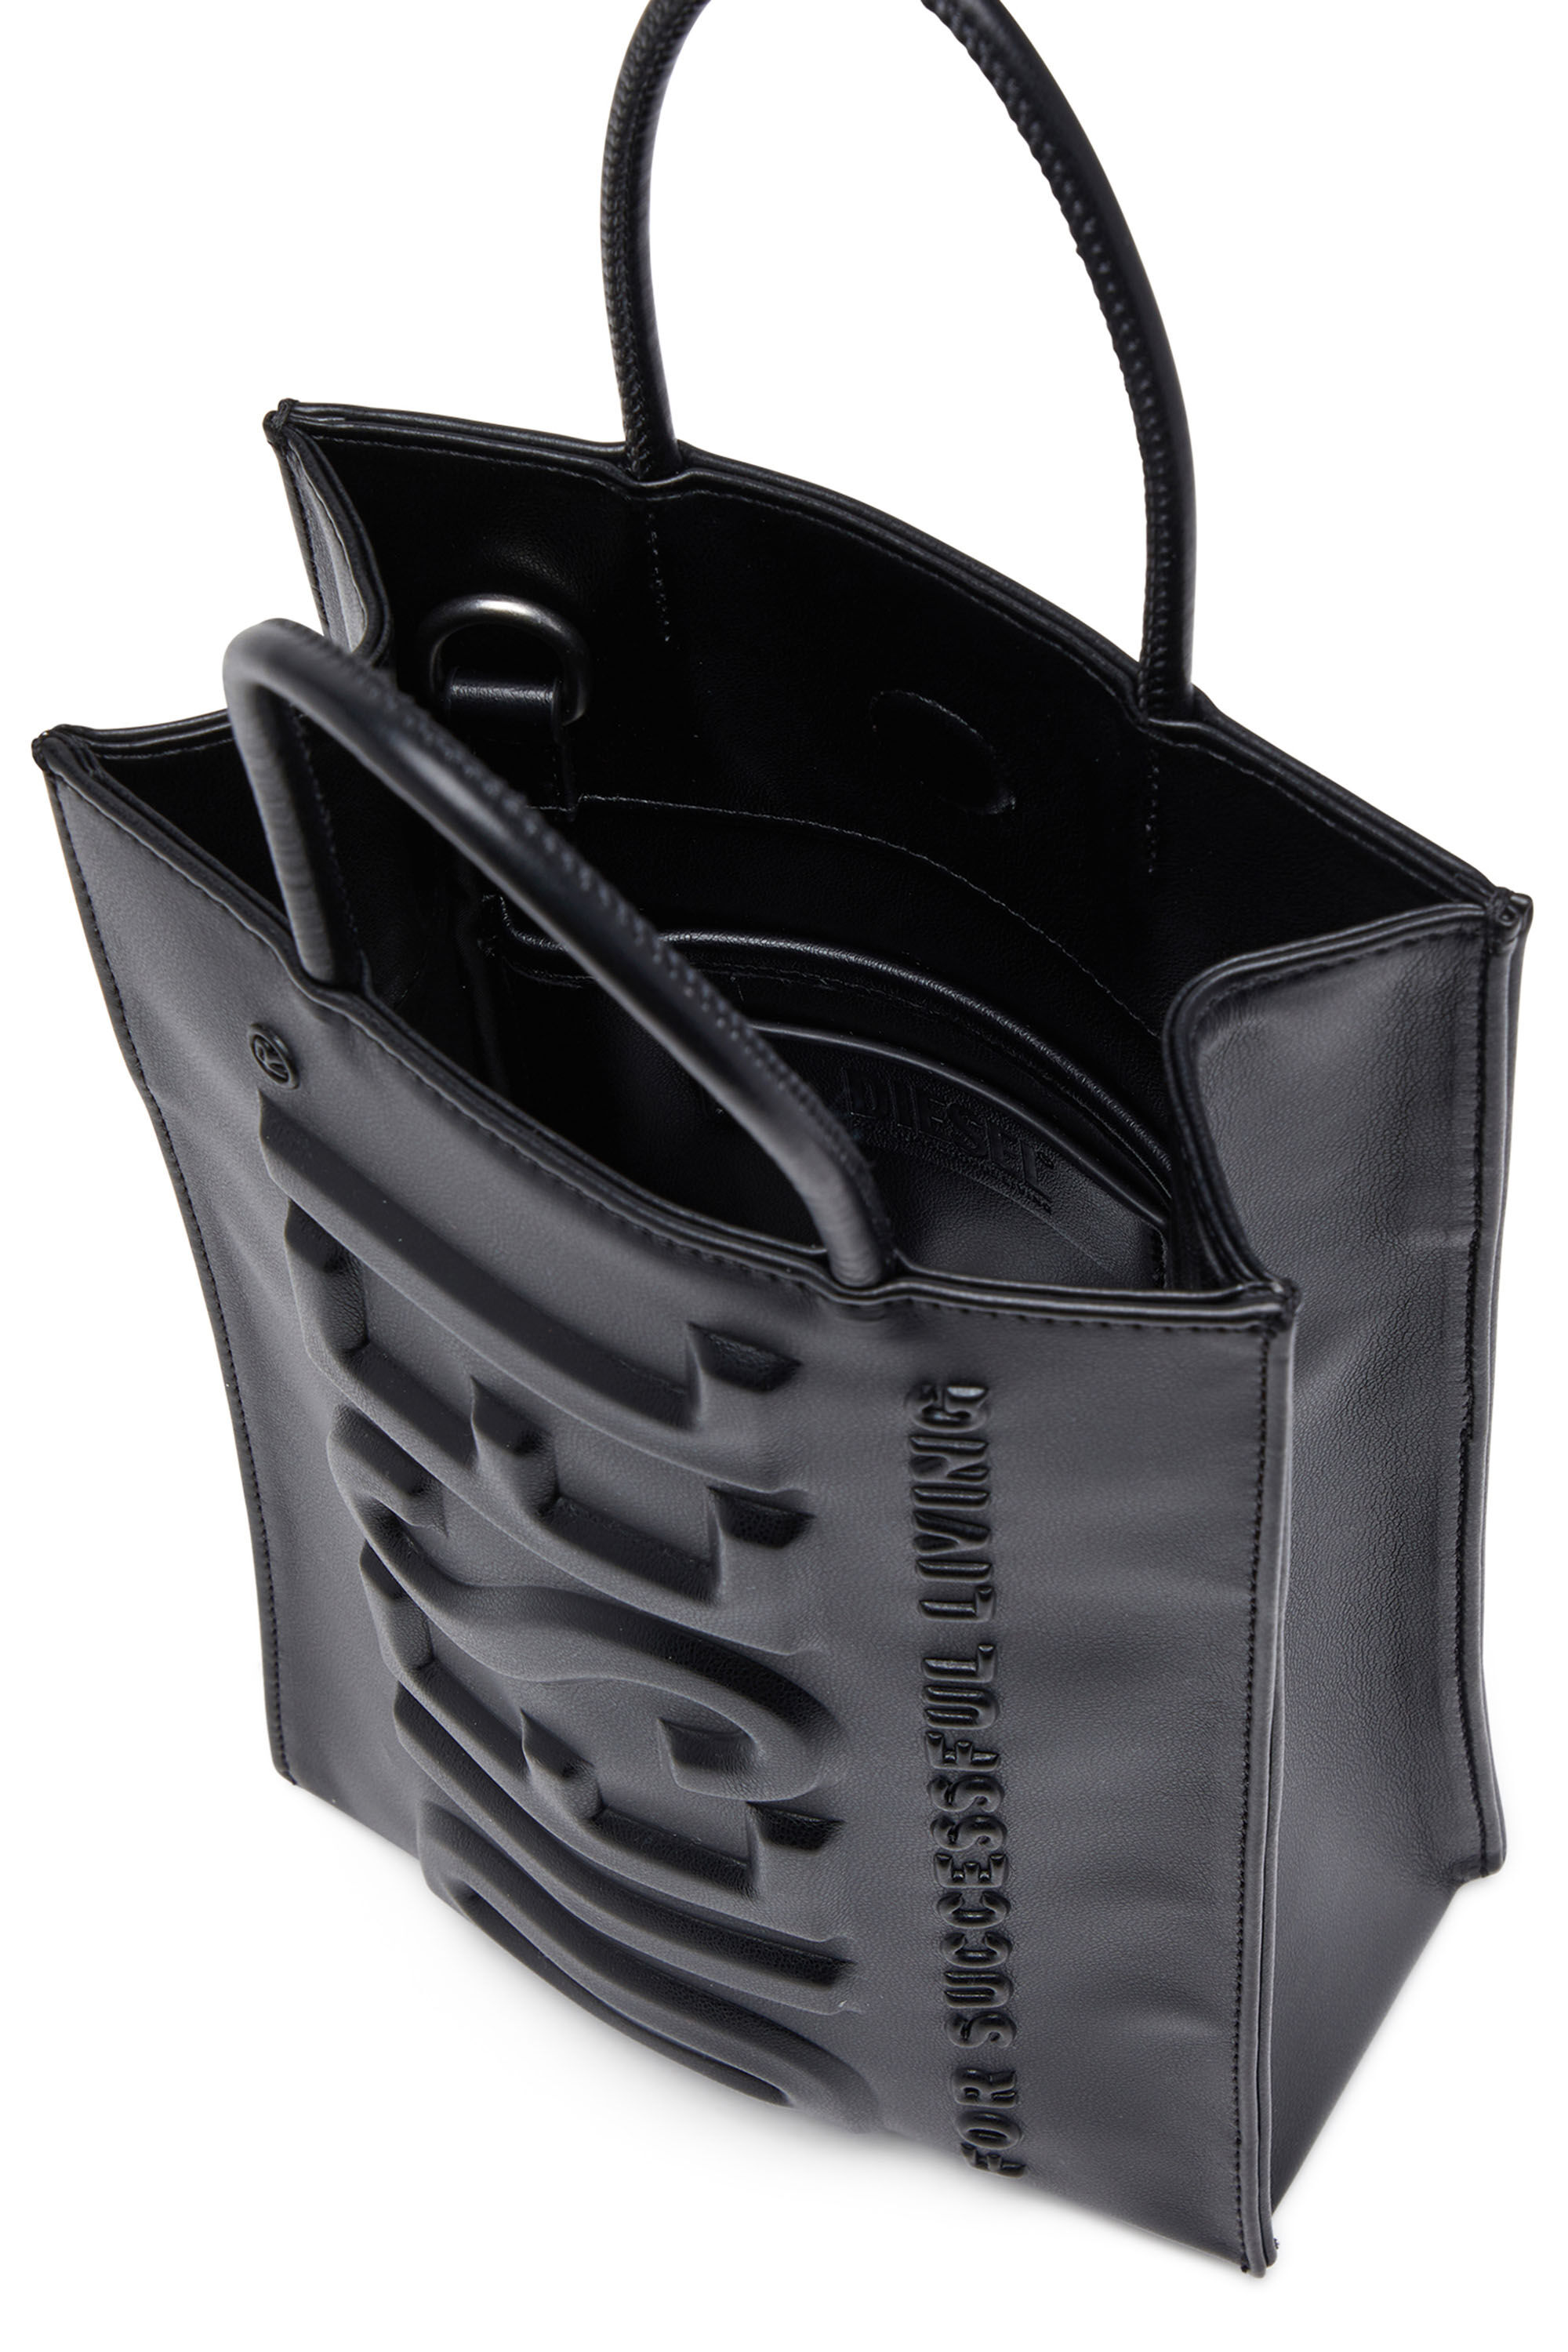 DSL 3D SHOPPER M X Dsl 3D Shopper M X - PU tote bag with embossed 